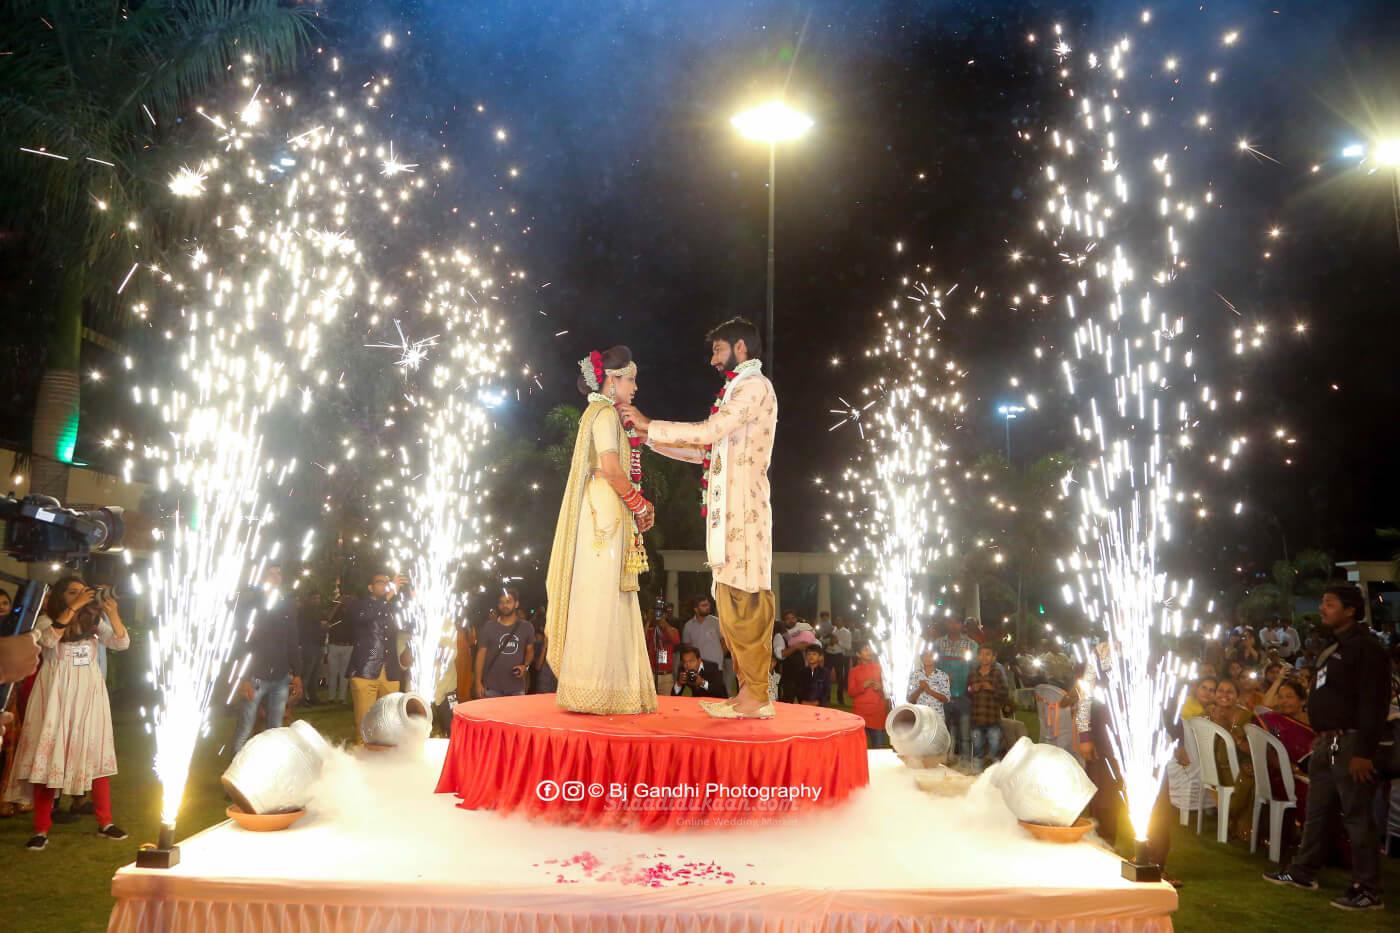 Chitrali weds Jaypal